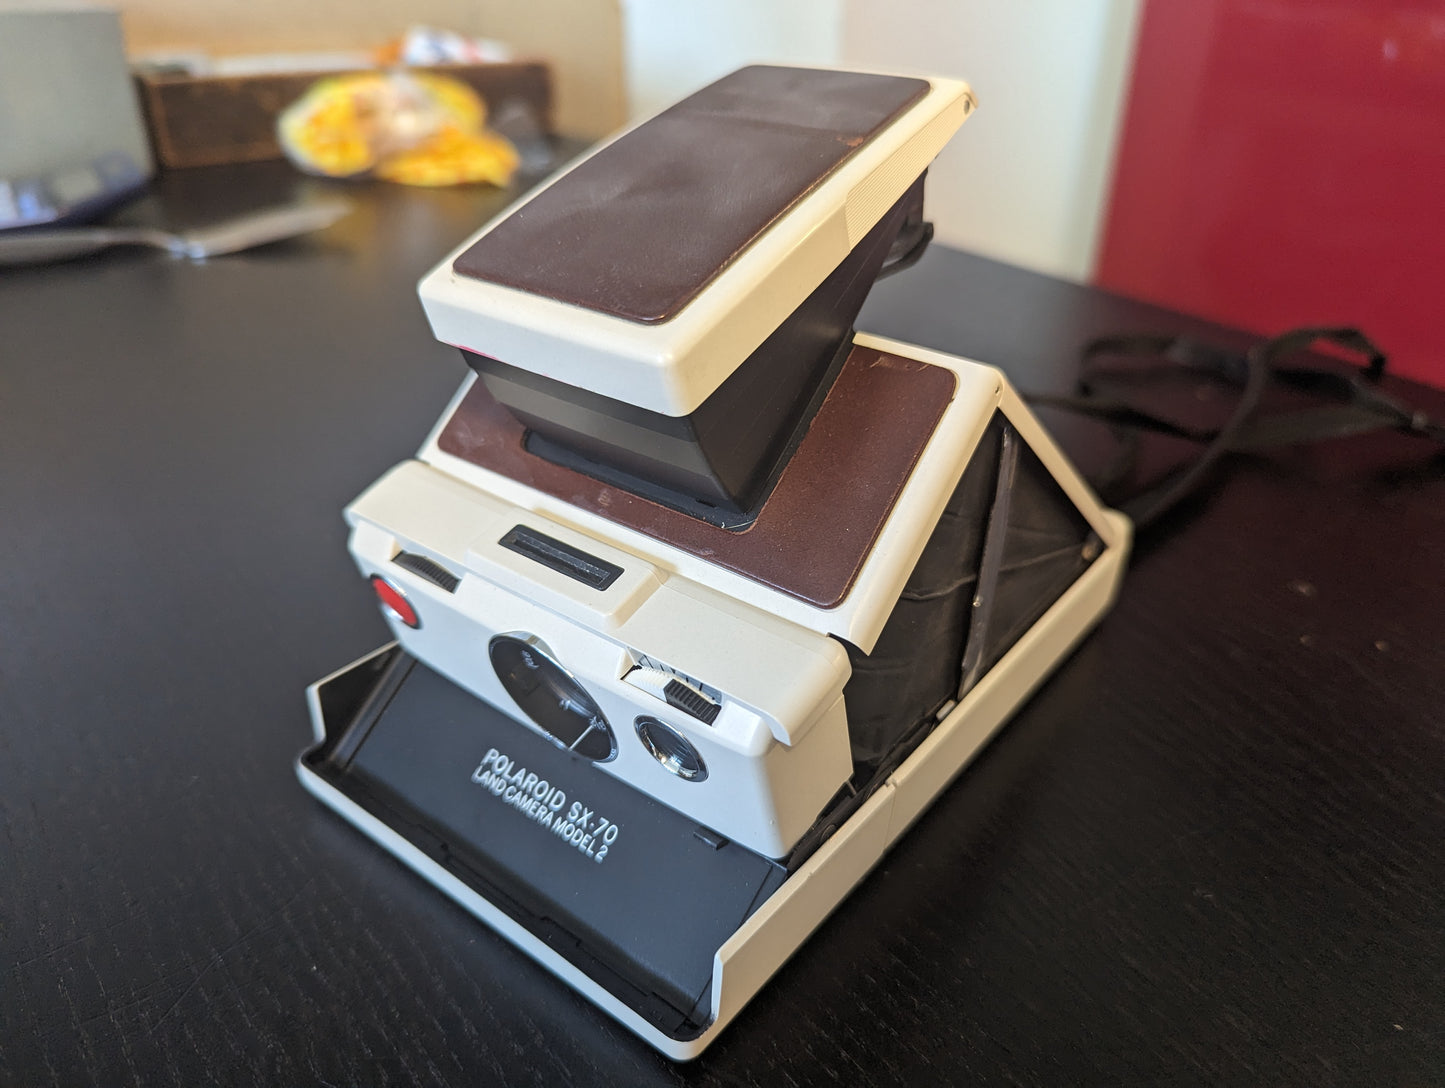 Kamera Polaroid i bæreveske